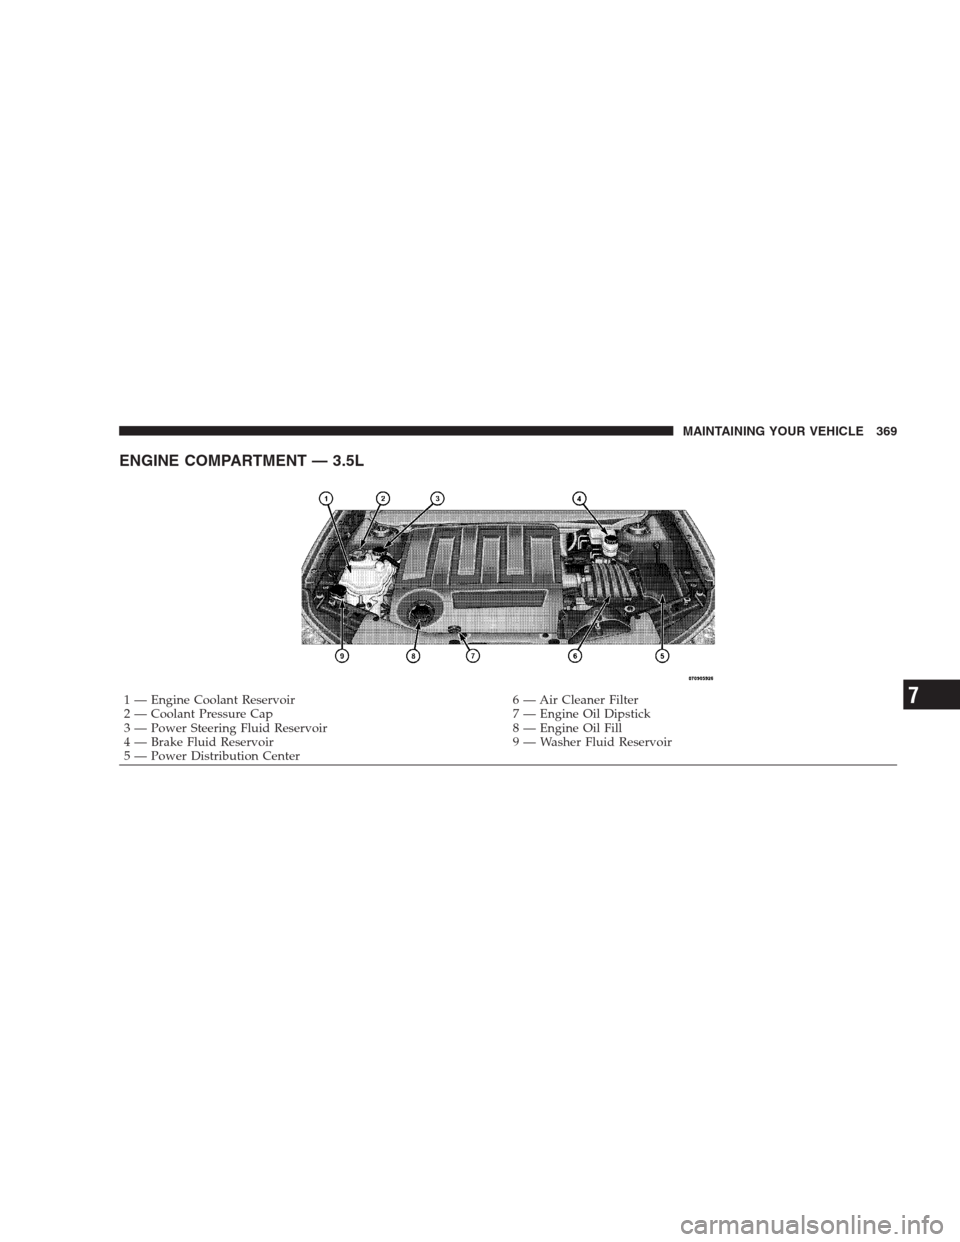 DODGE AVENGER 2009 2.G Manual Online ENGINE COMPARTMENT — 3.5L
1 — Engine Coolant Reservoir 6 — Air Cleaner Filter
2 — Coolant Pressure Cap 7 — Engine Oil Dipstick
3 — Power Steering Fluid Reservoir 8 — Engine Oil Fill
4 �